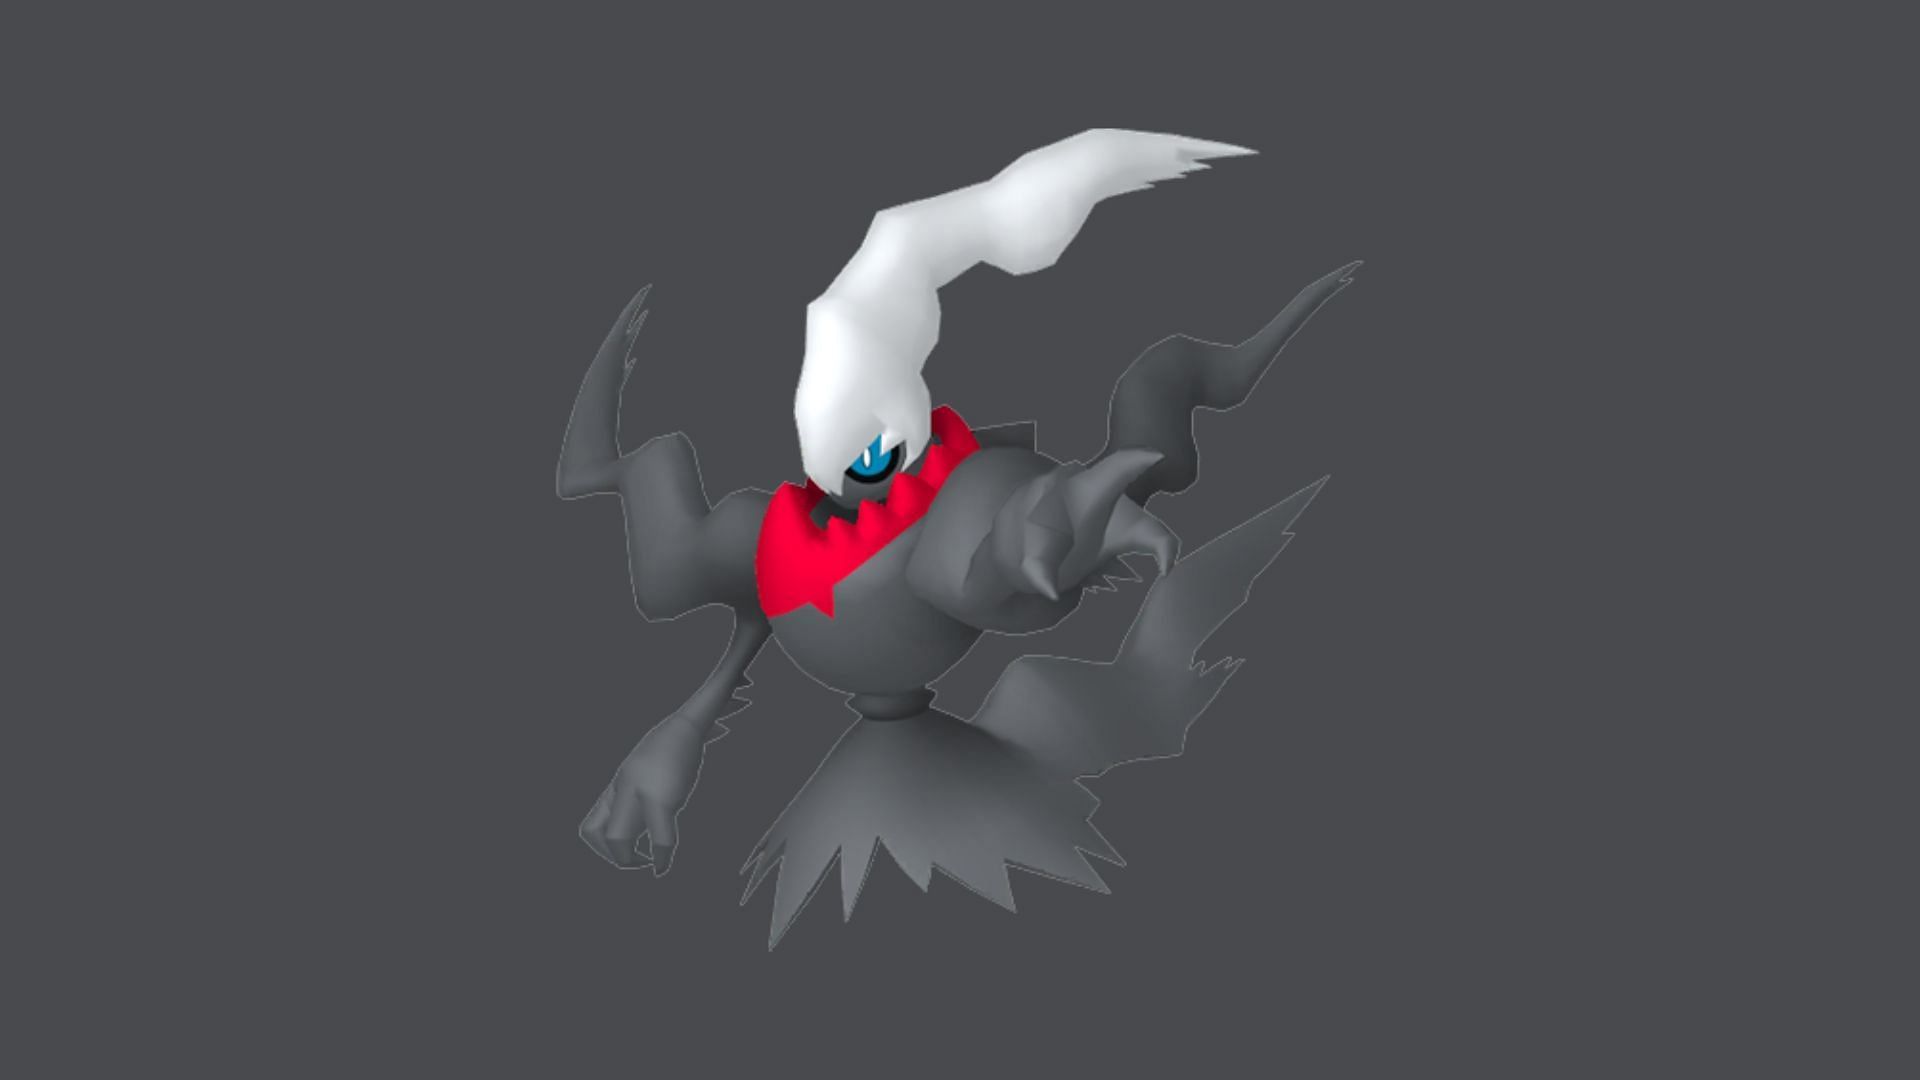 Darkrai is one of the most interesting Dark-type Pokemon (Image via TPC)